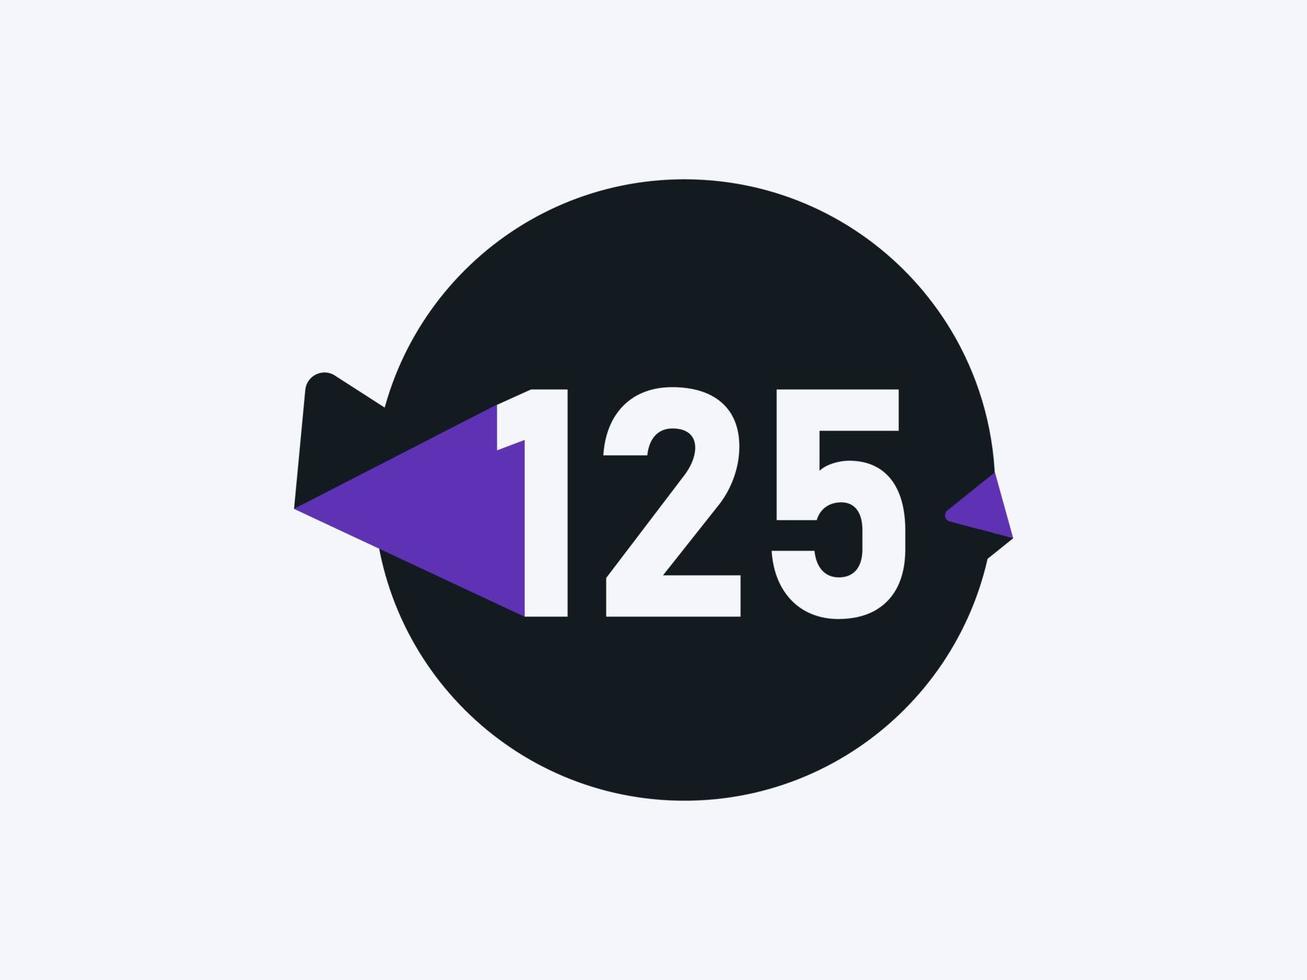 125 Number logo icon design vector image. Number logo icon design vector image